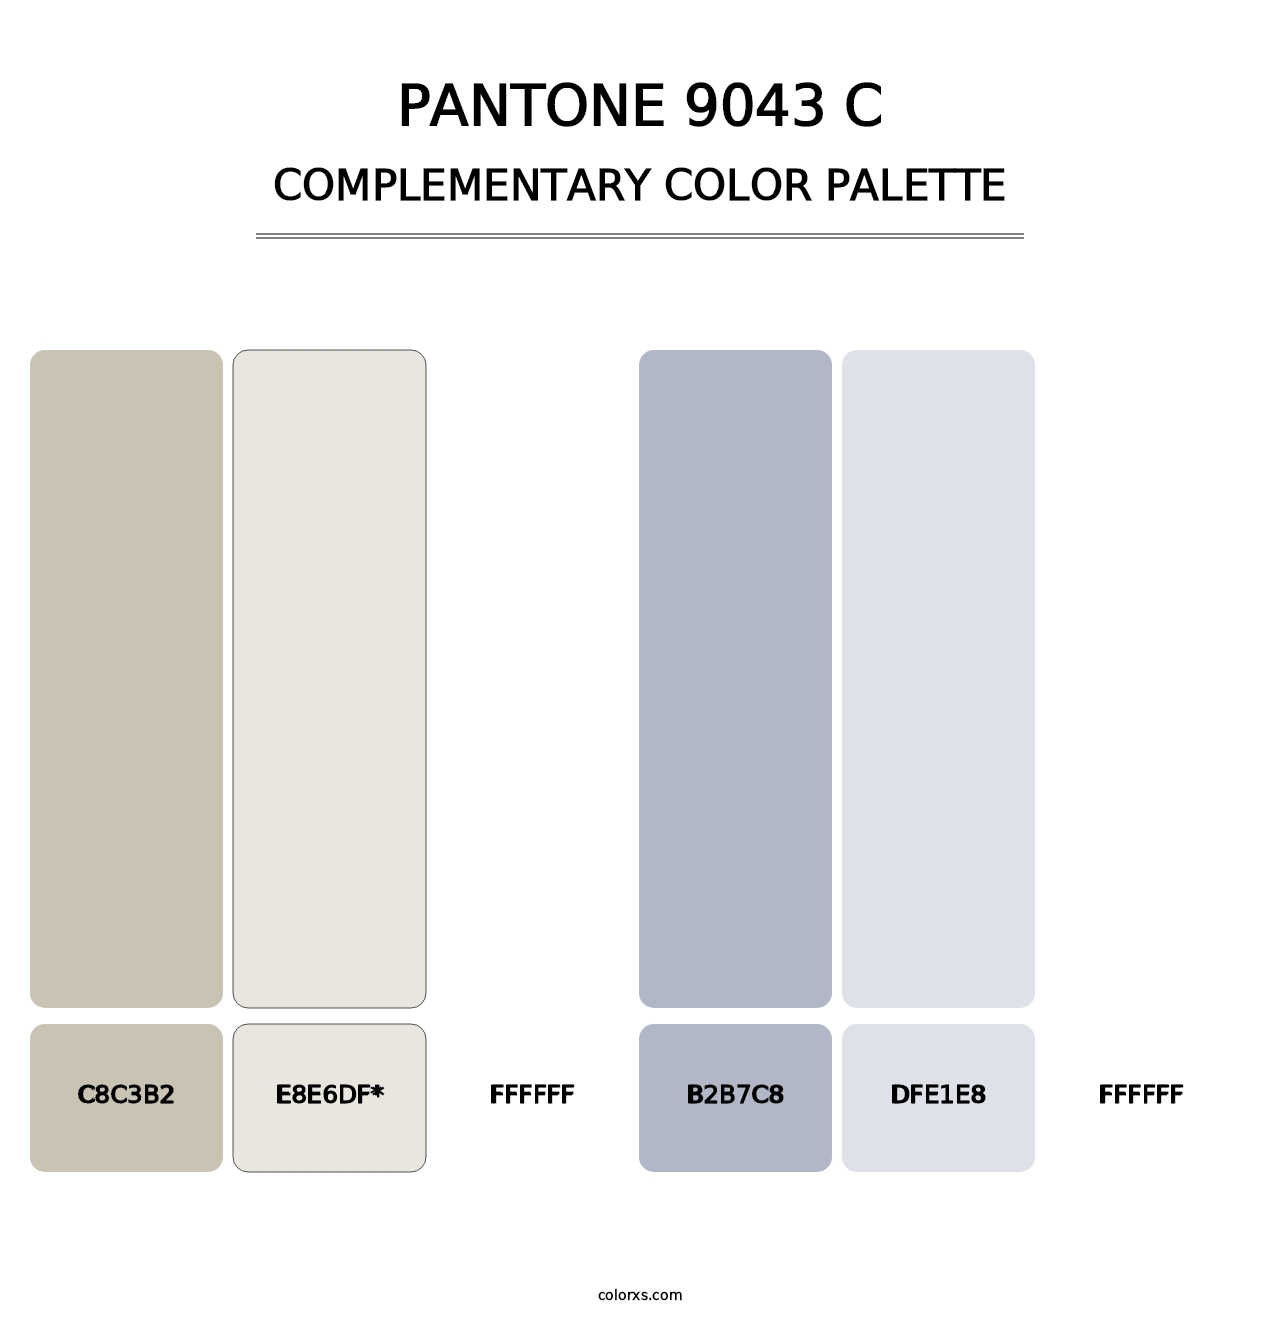 PANTONE 9043 C - Complementary Color Palette